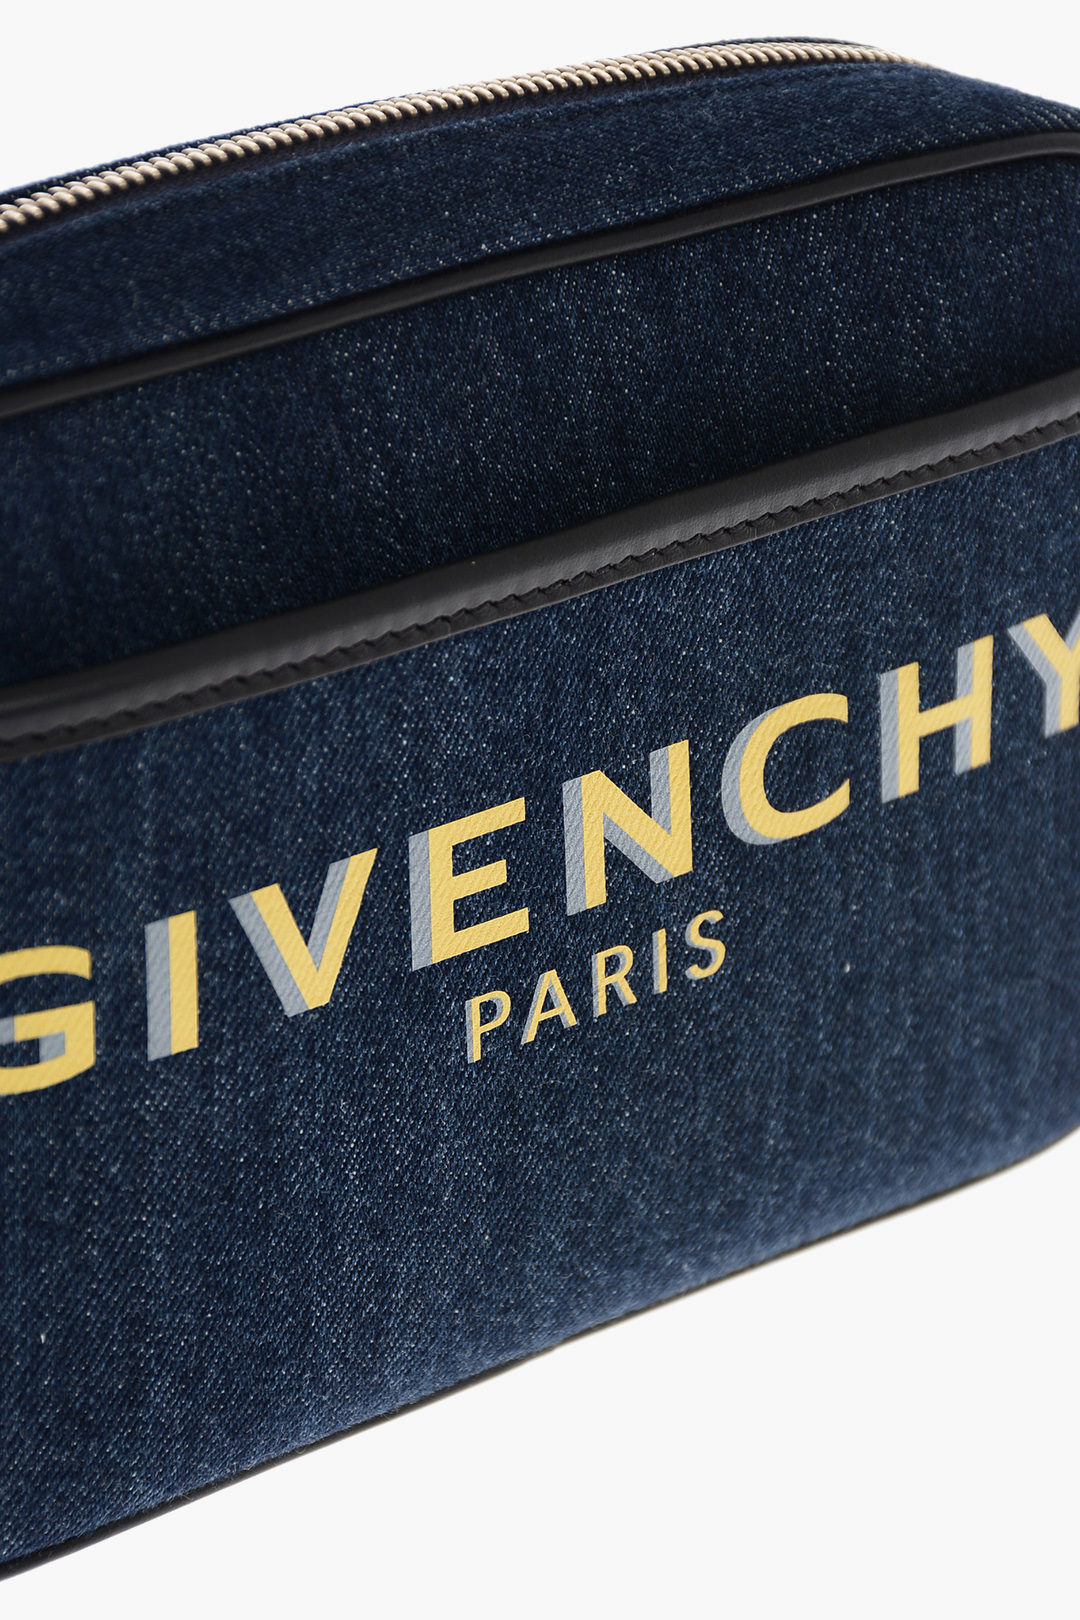 Givenchy Bond Camera Bag in Blue